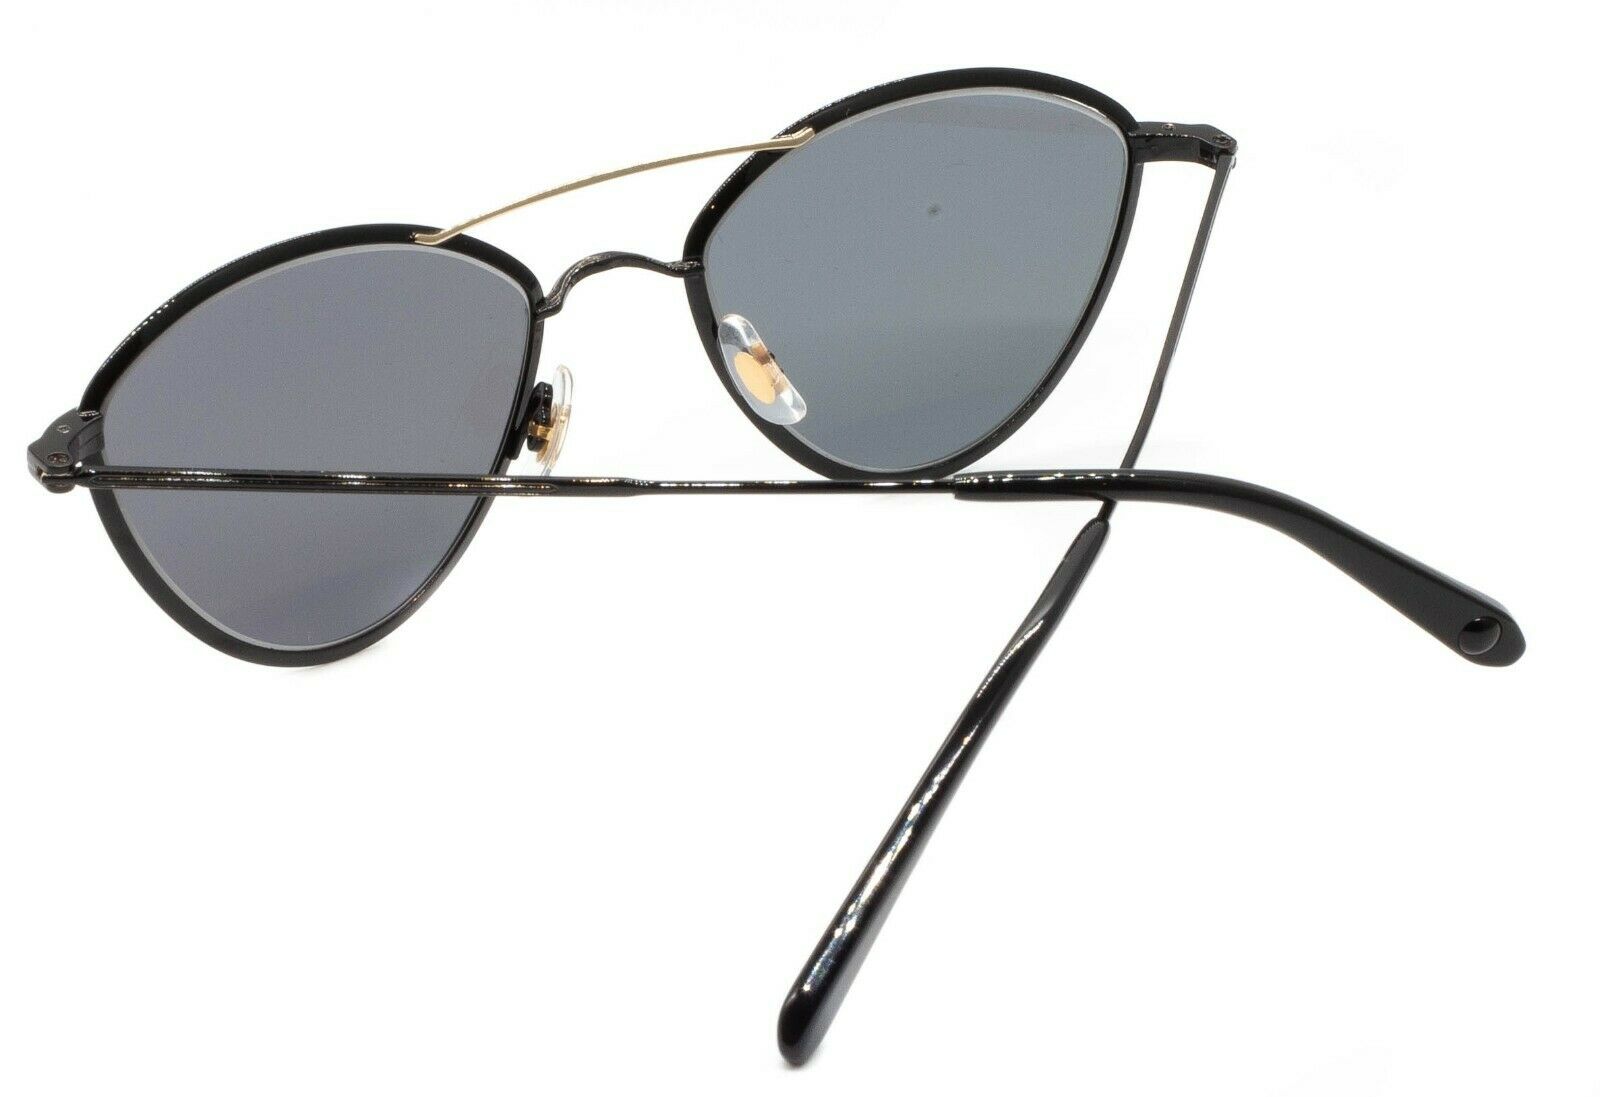 GARRETT LEIGHT CALIFORNIA BREEZE 4051 BK-BK 51mm Sunglasses Shades Frames - New